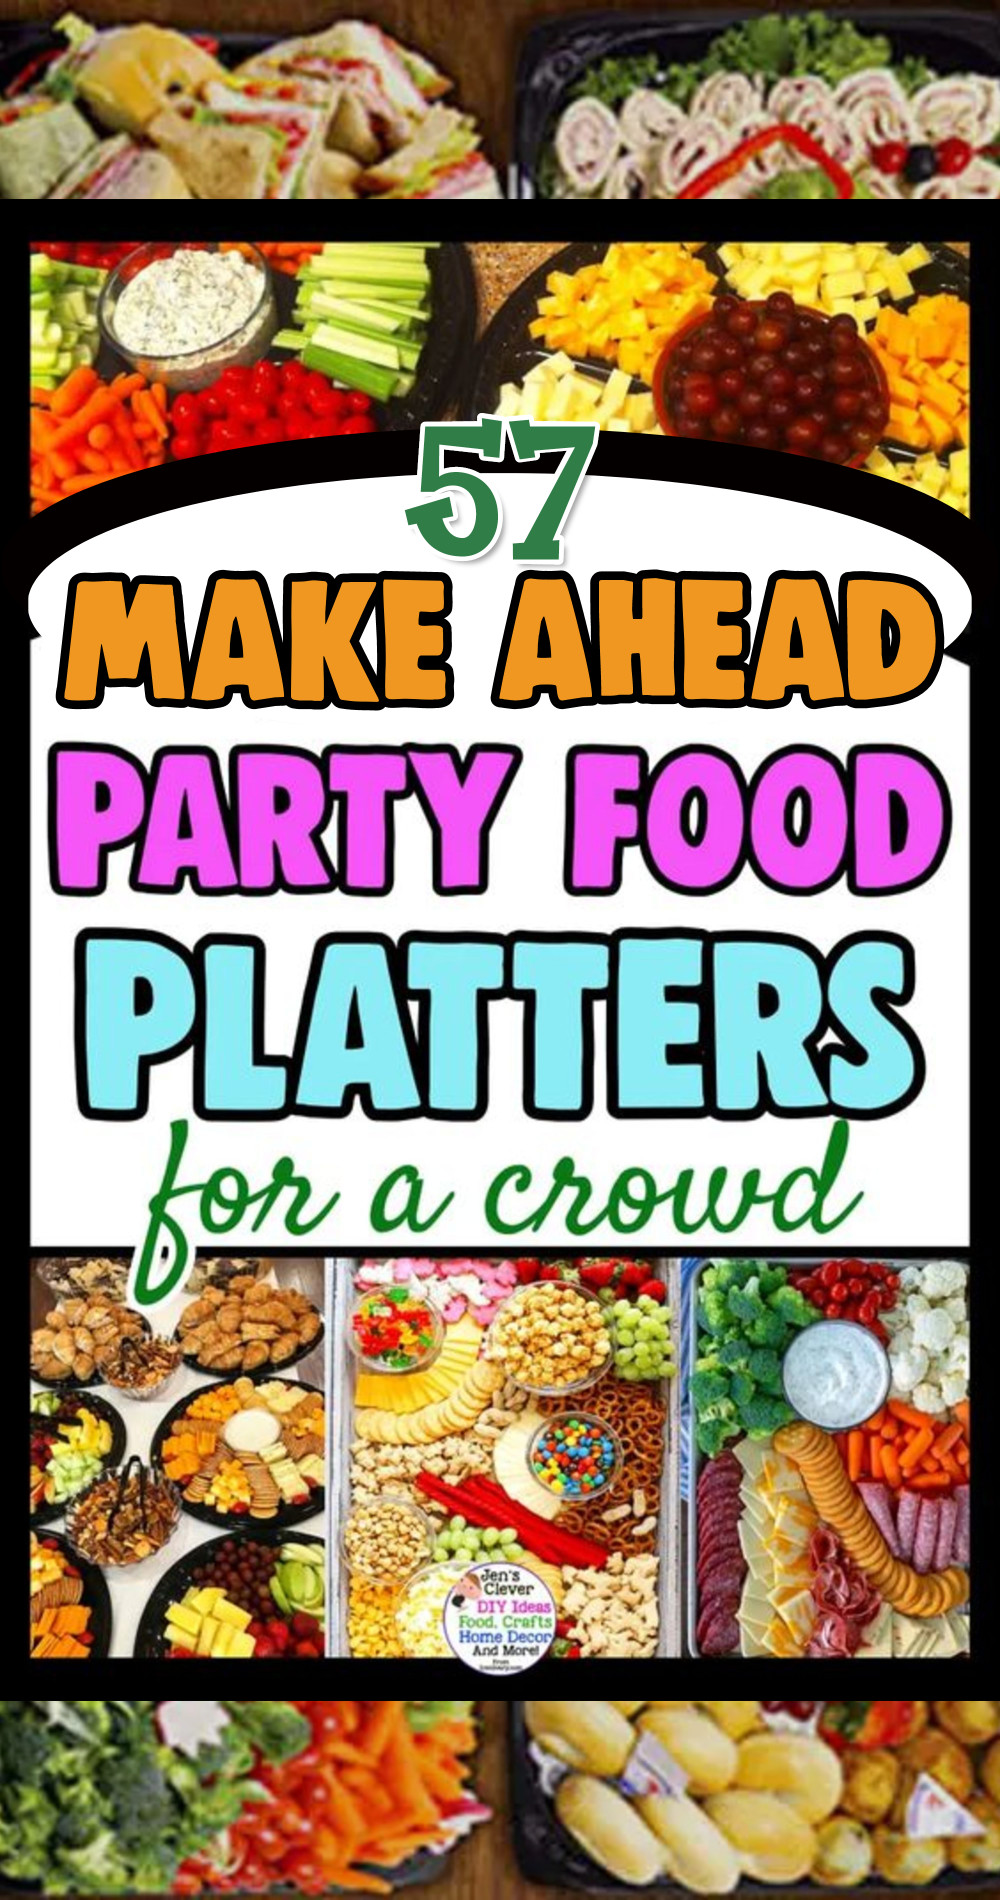 make ahead party food platters